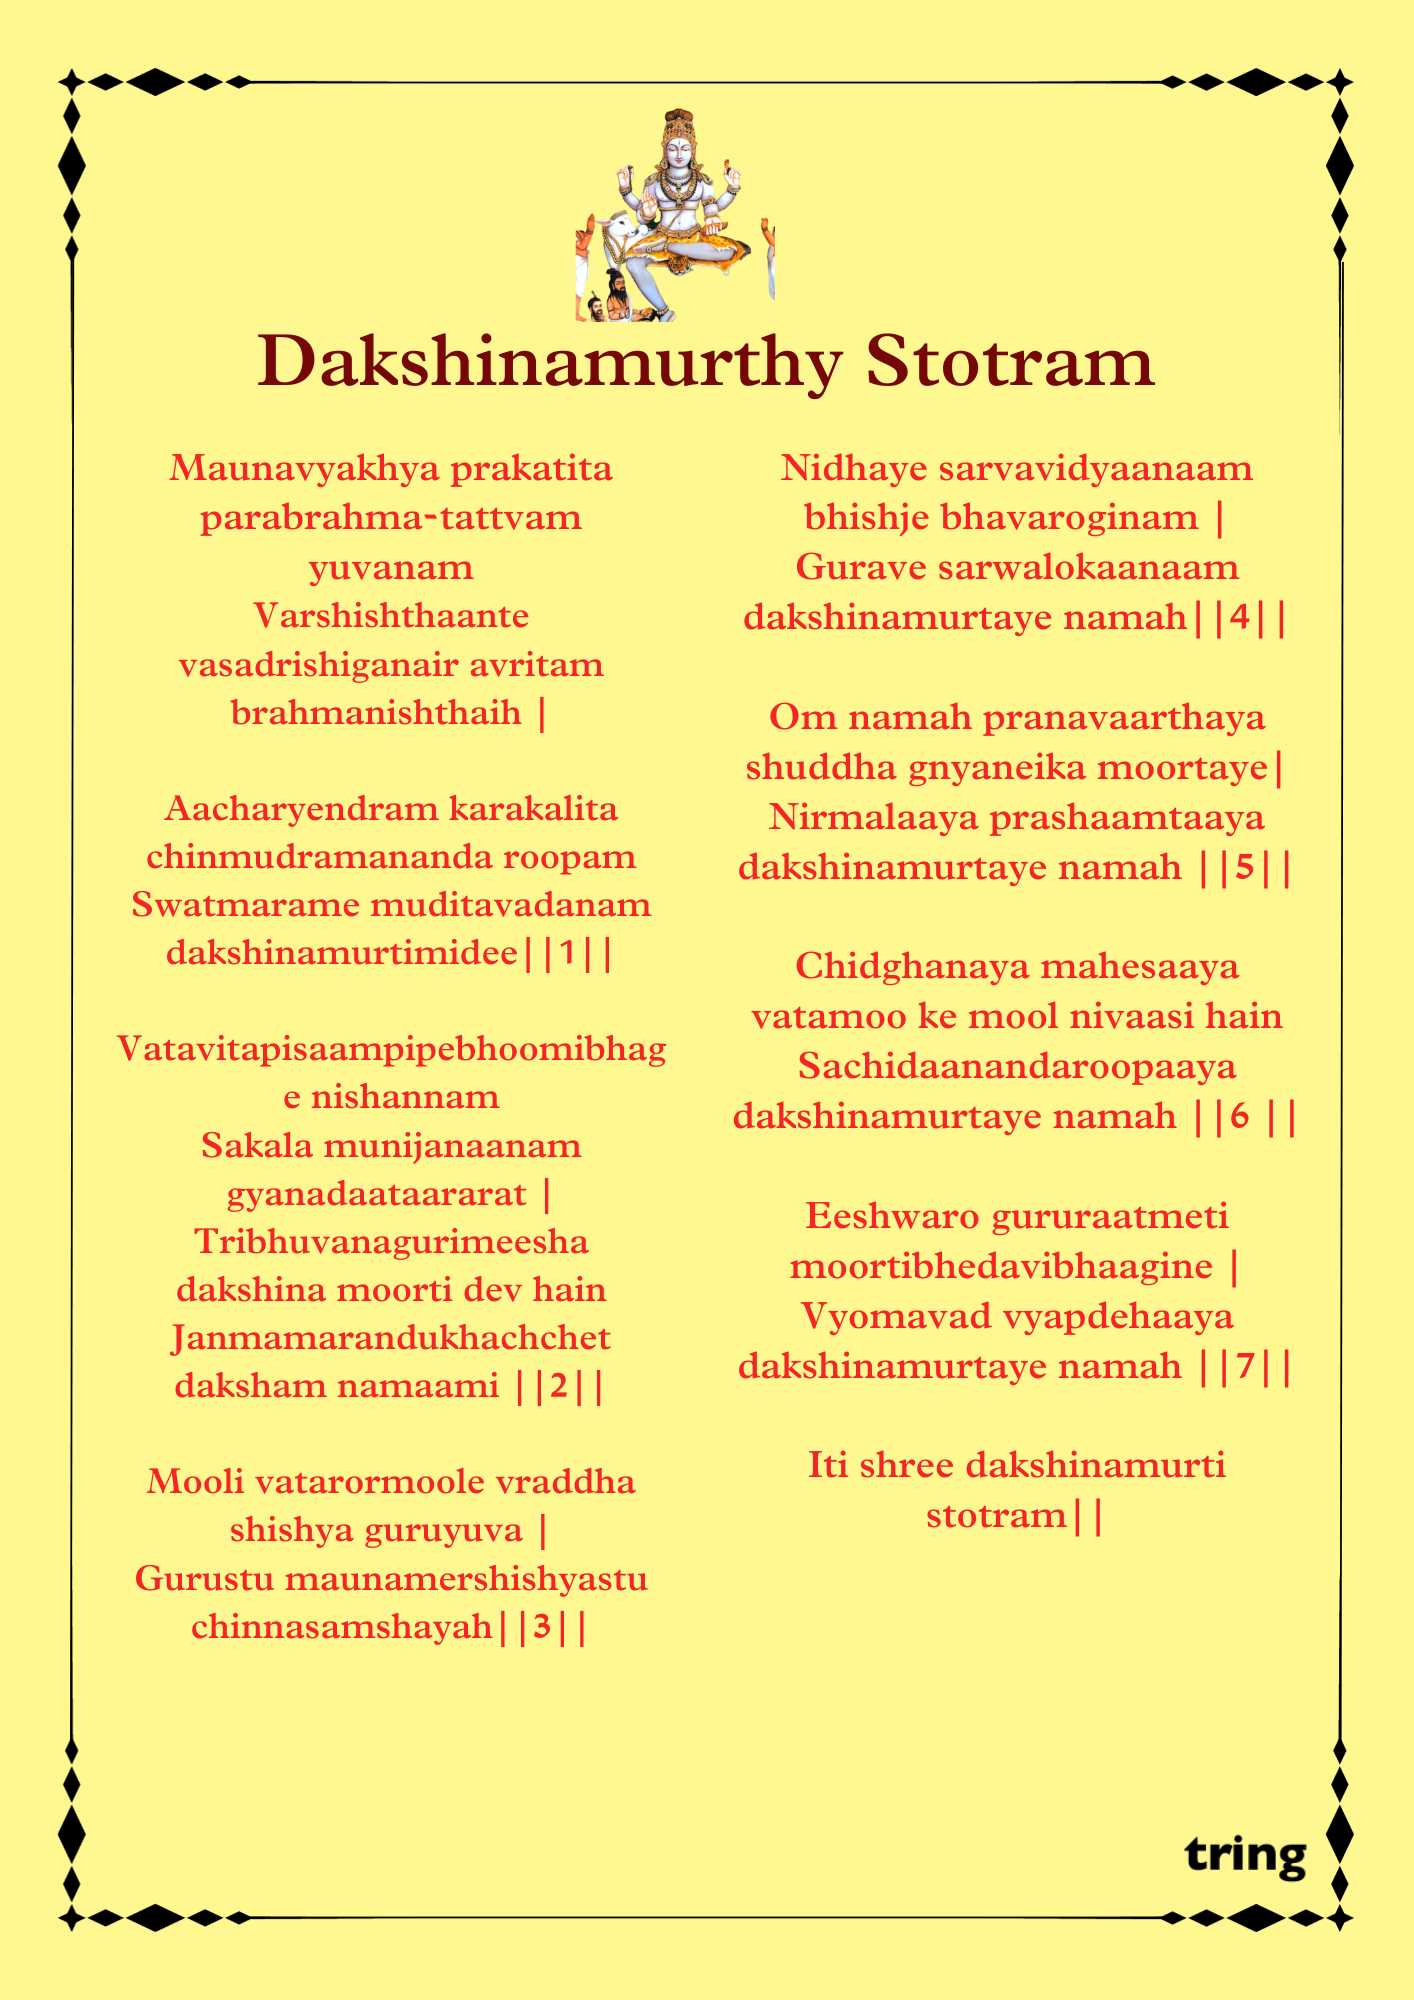 Dakshinamurthy Stotram Images (2)